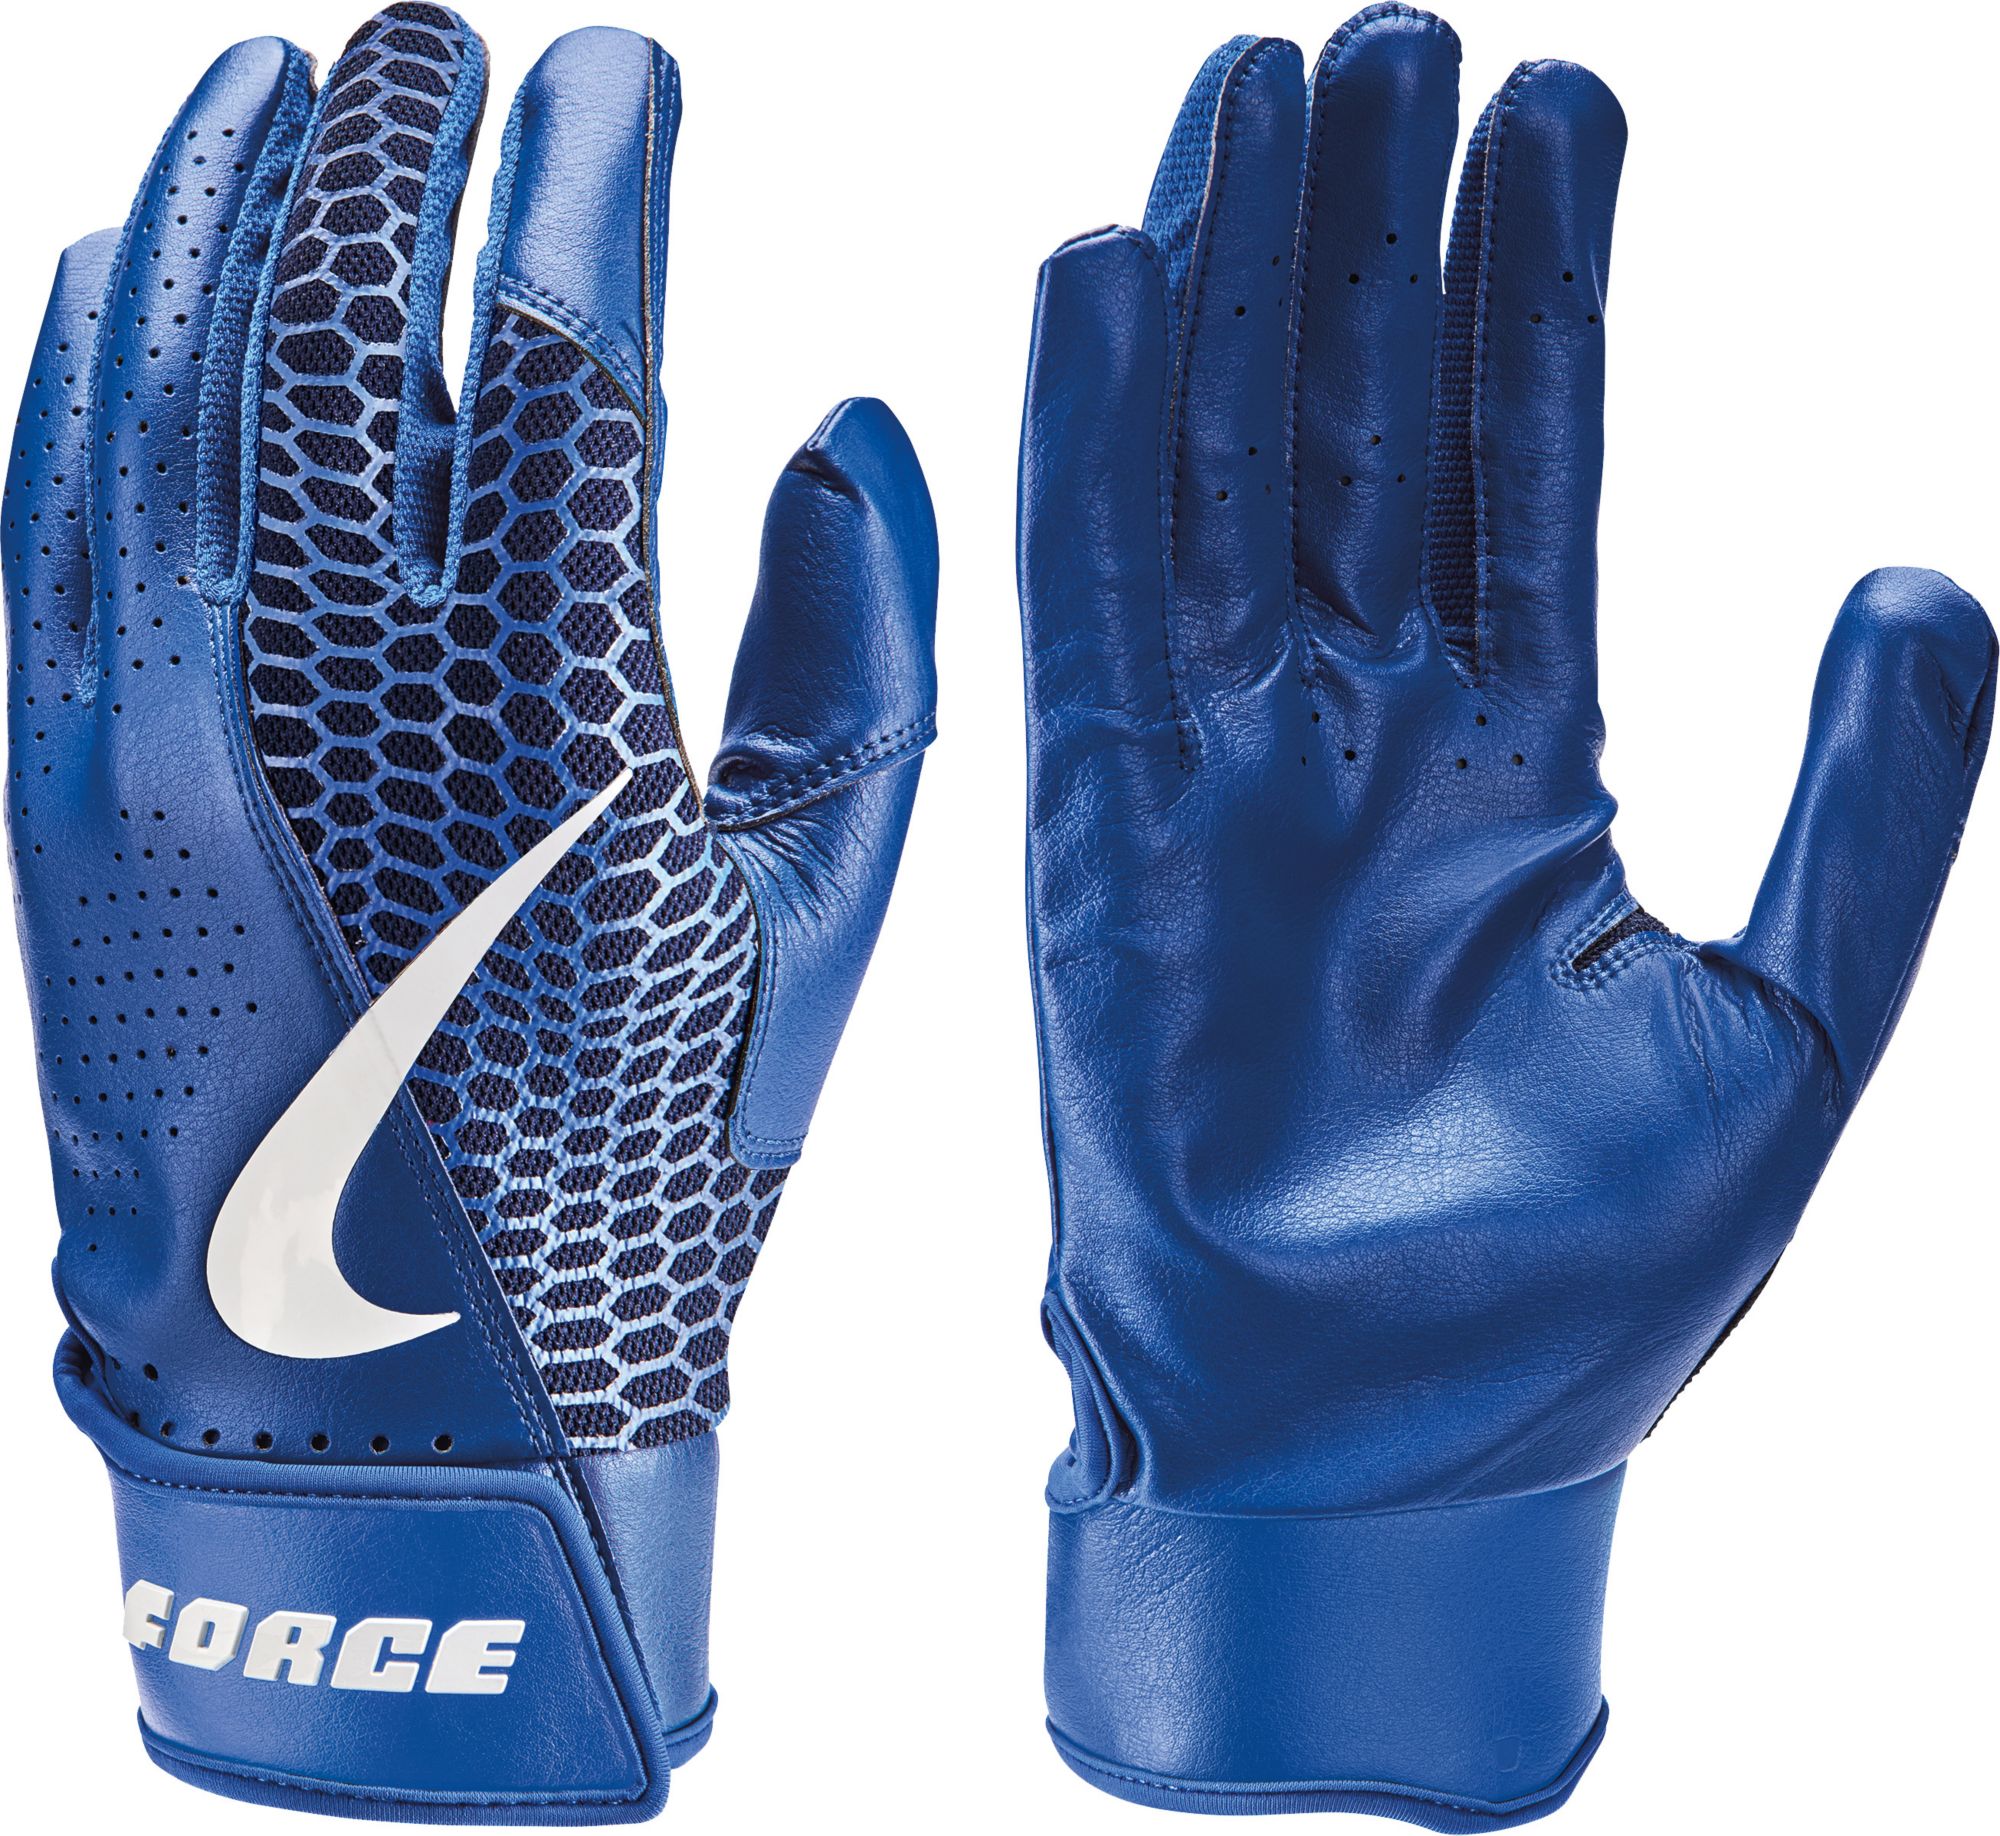 nike force edge batting gloves